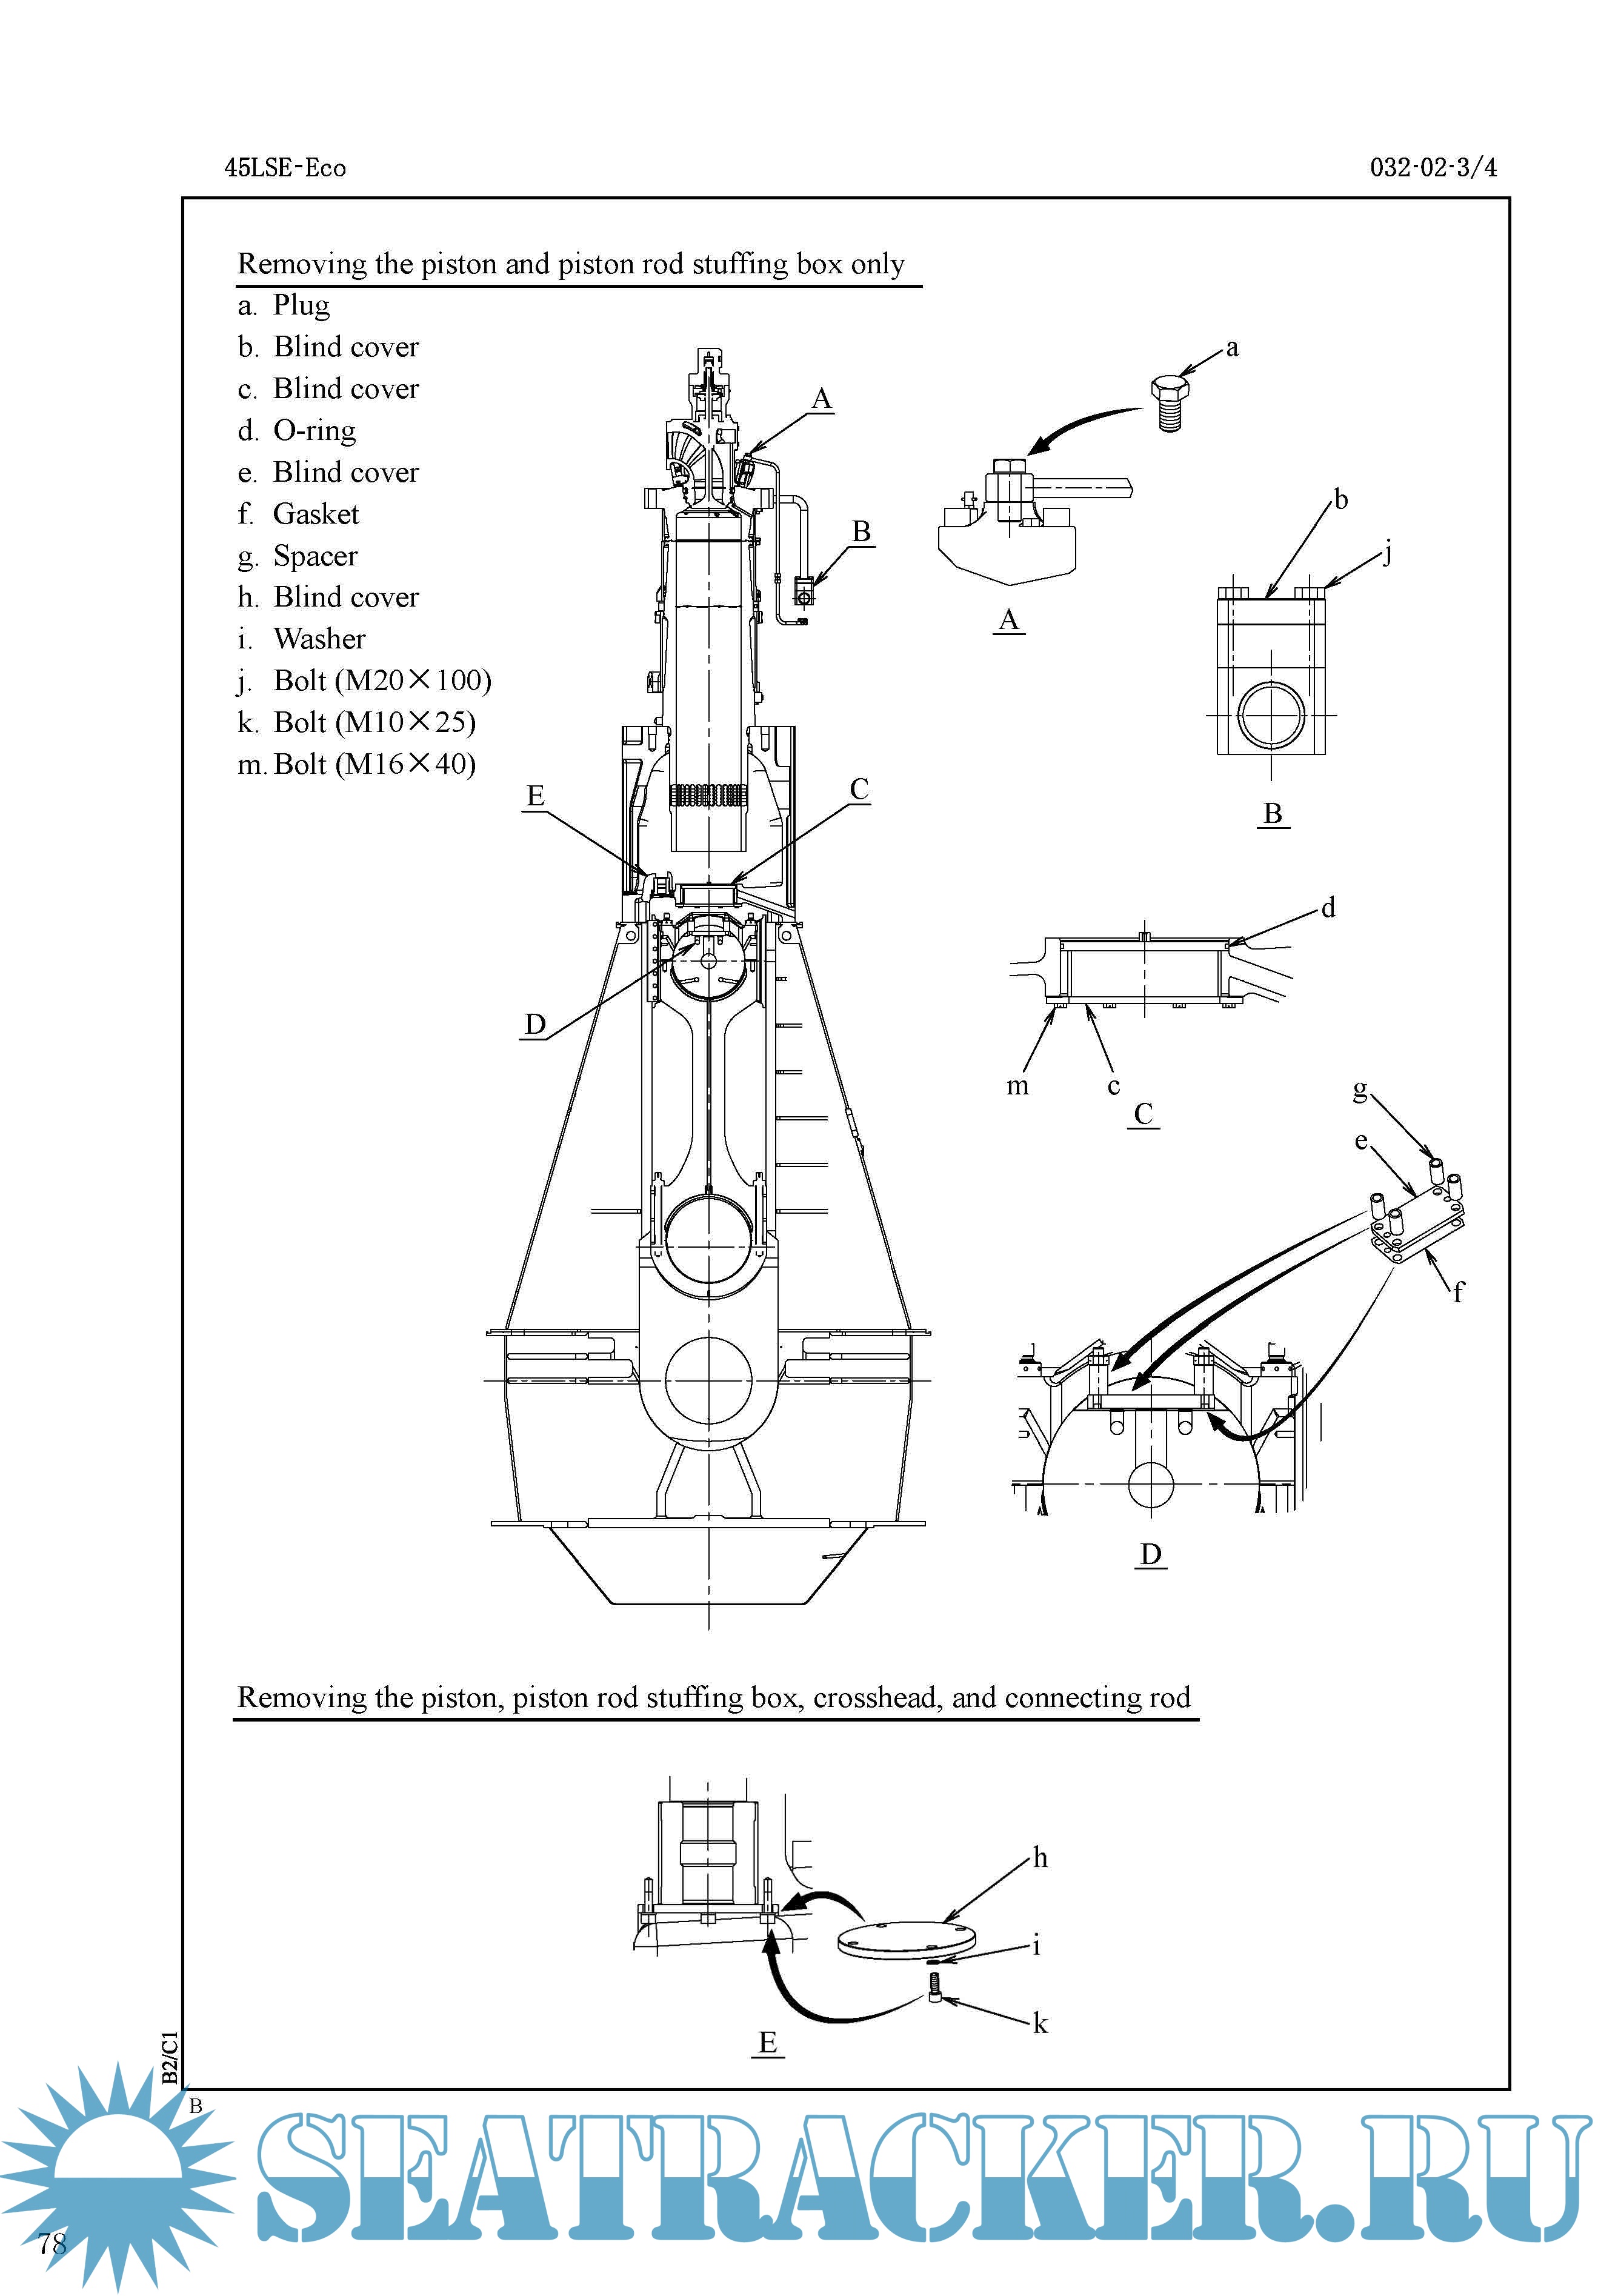 aalborg mission boiler manual